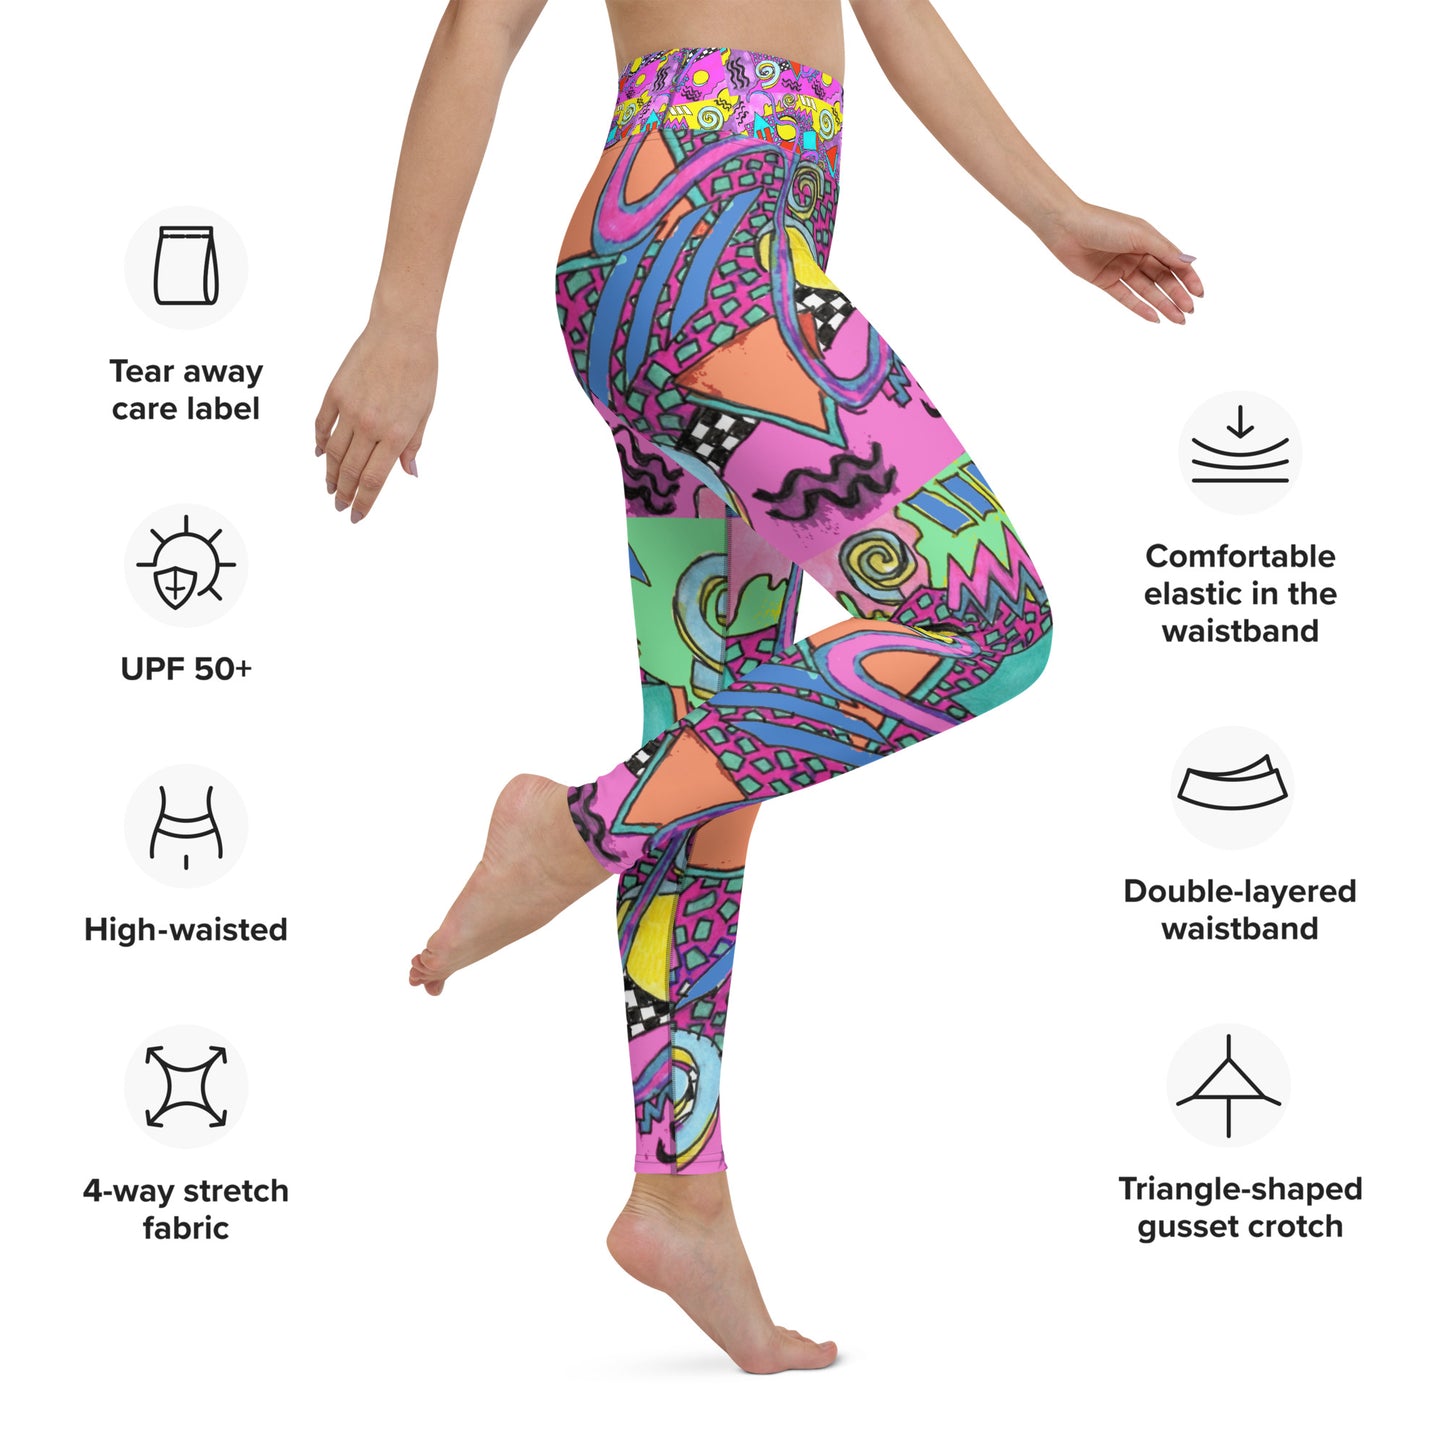 Gorky #Datass Metrocenter Retro Yoga Pants (with pocket!)